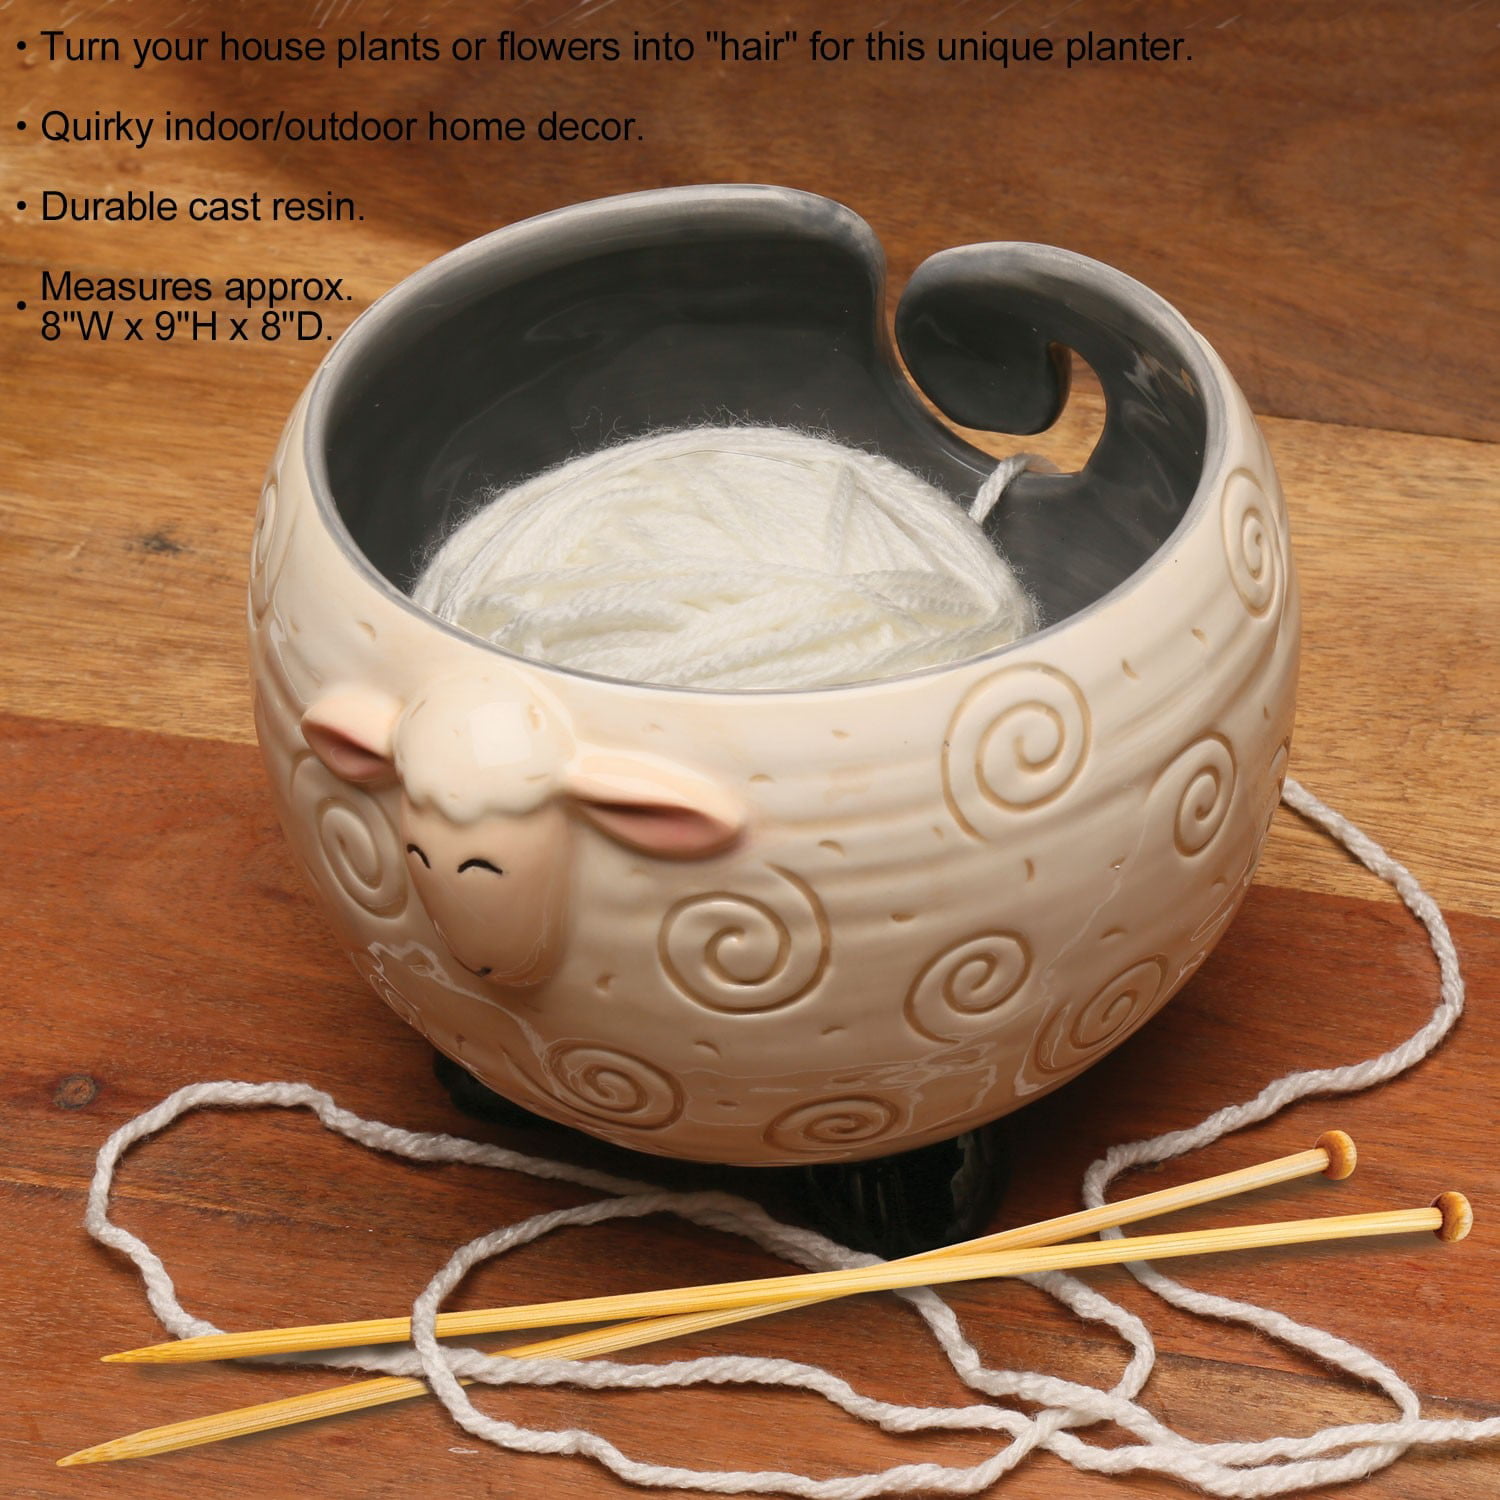 What on Earth Sleepy Sheep Ceramic Yarn Bowl Knitting Bowl - Holds Ball of Yarn